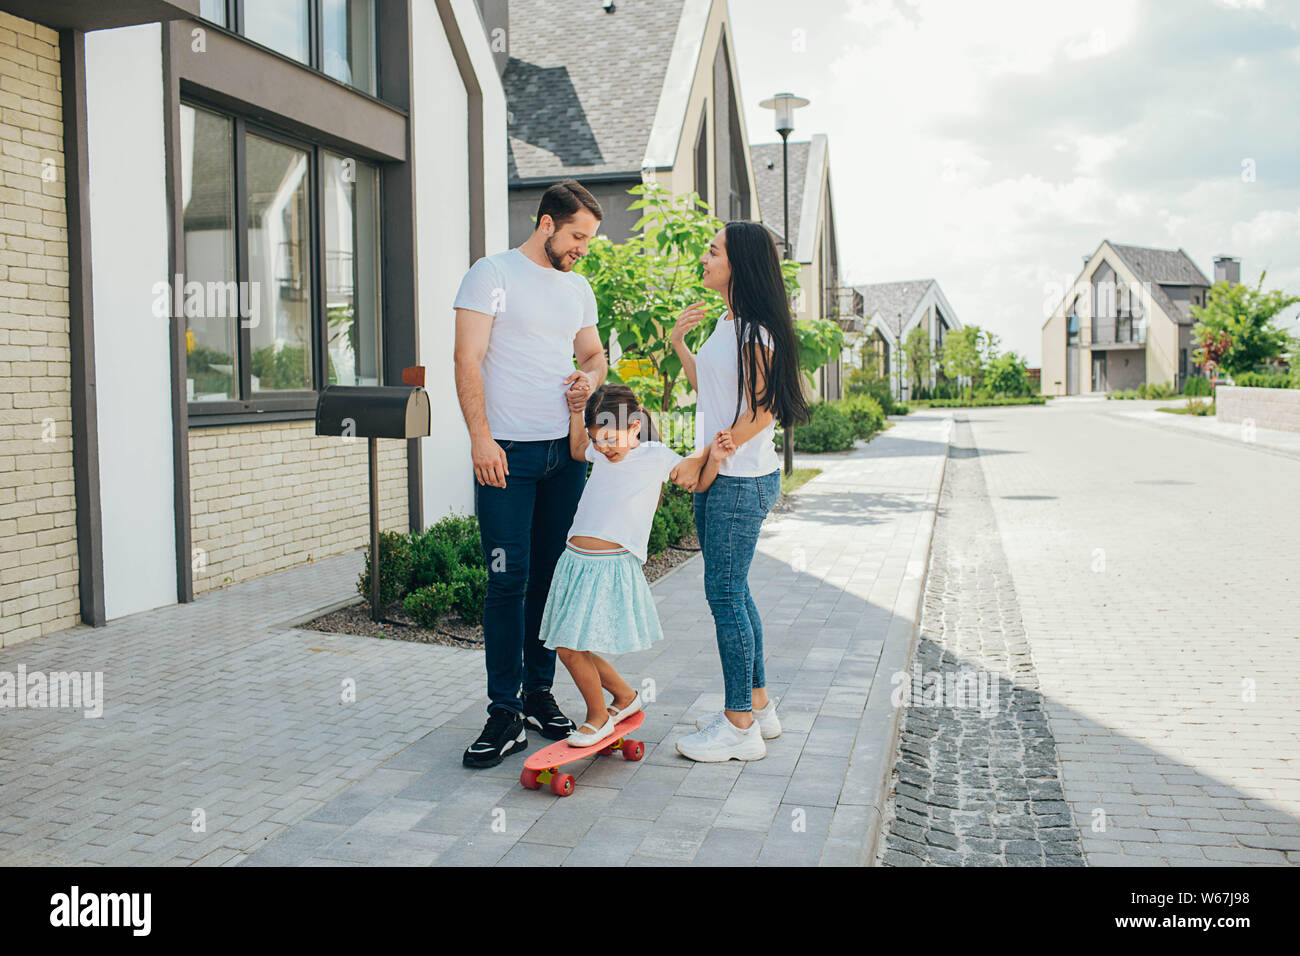 Happy family walking down the street, their child rides a skateboard Stock Photo